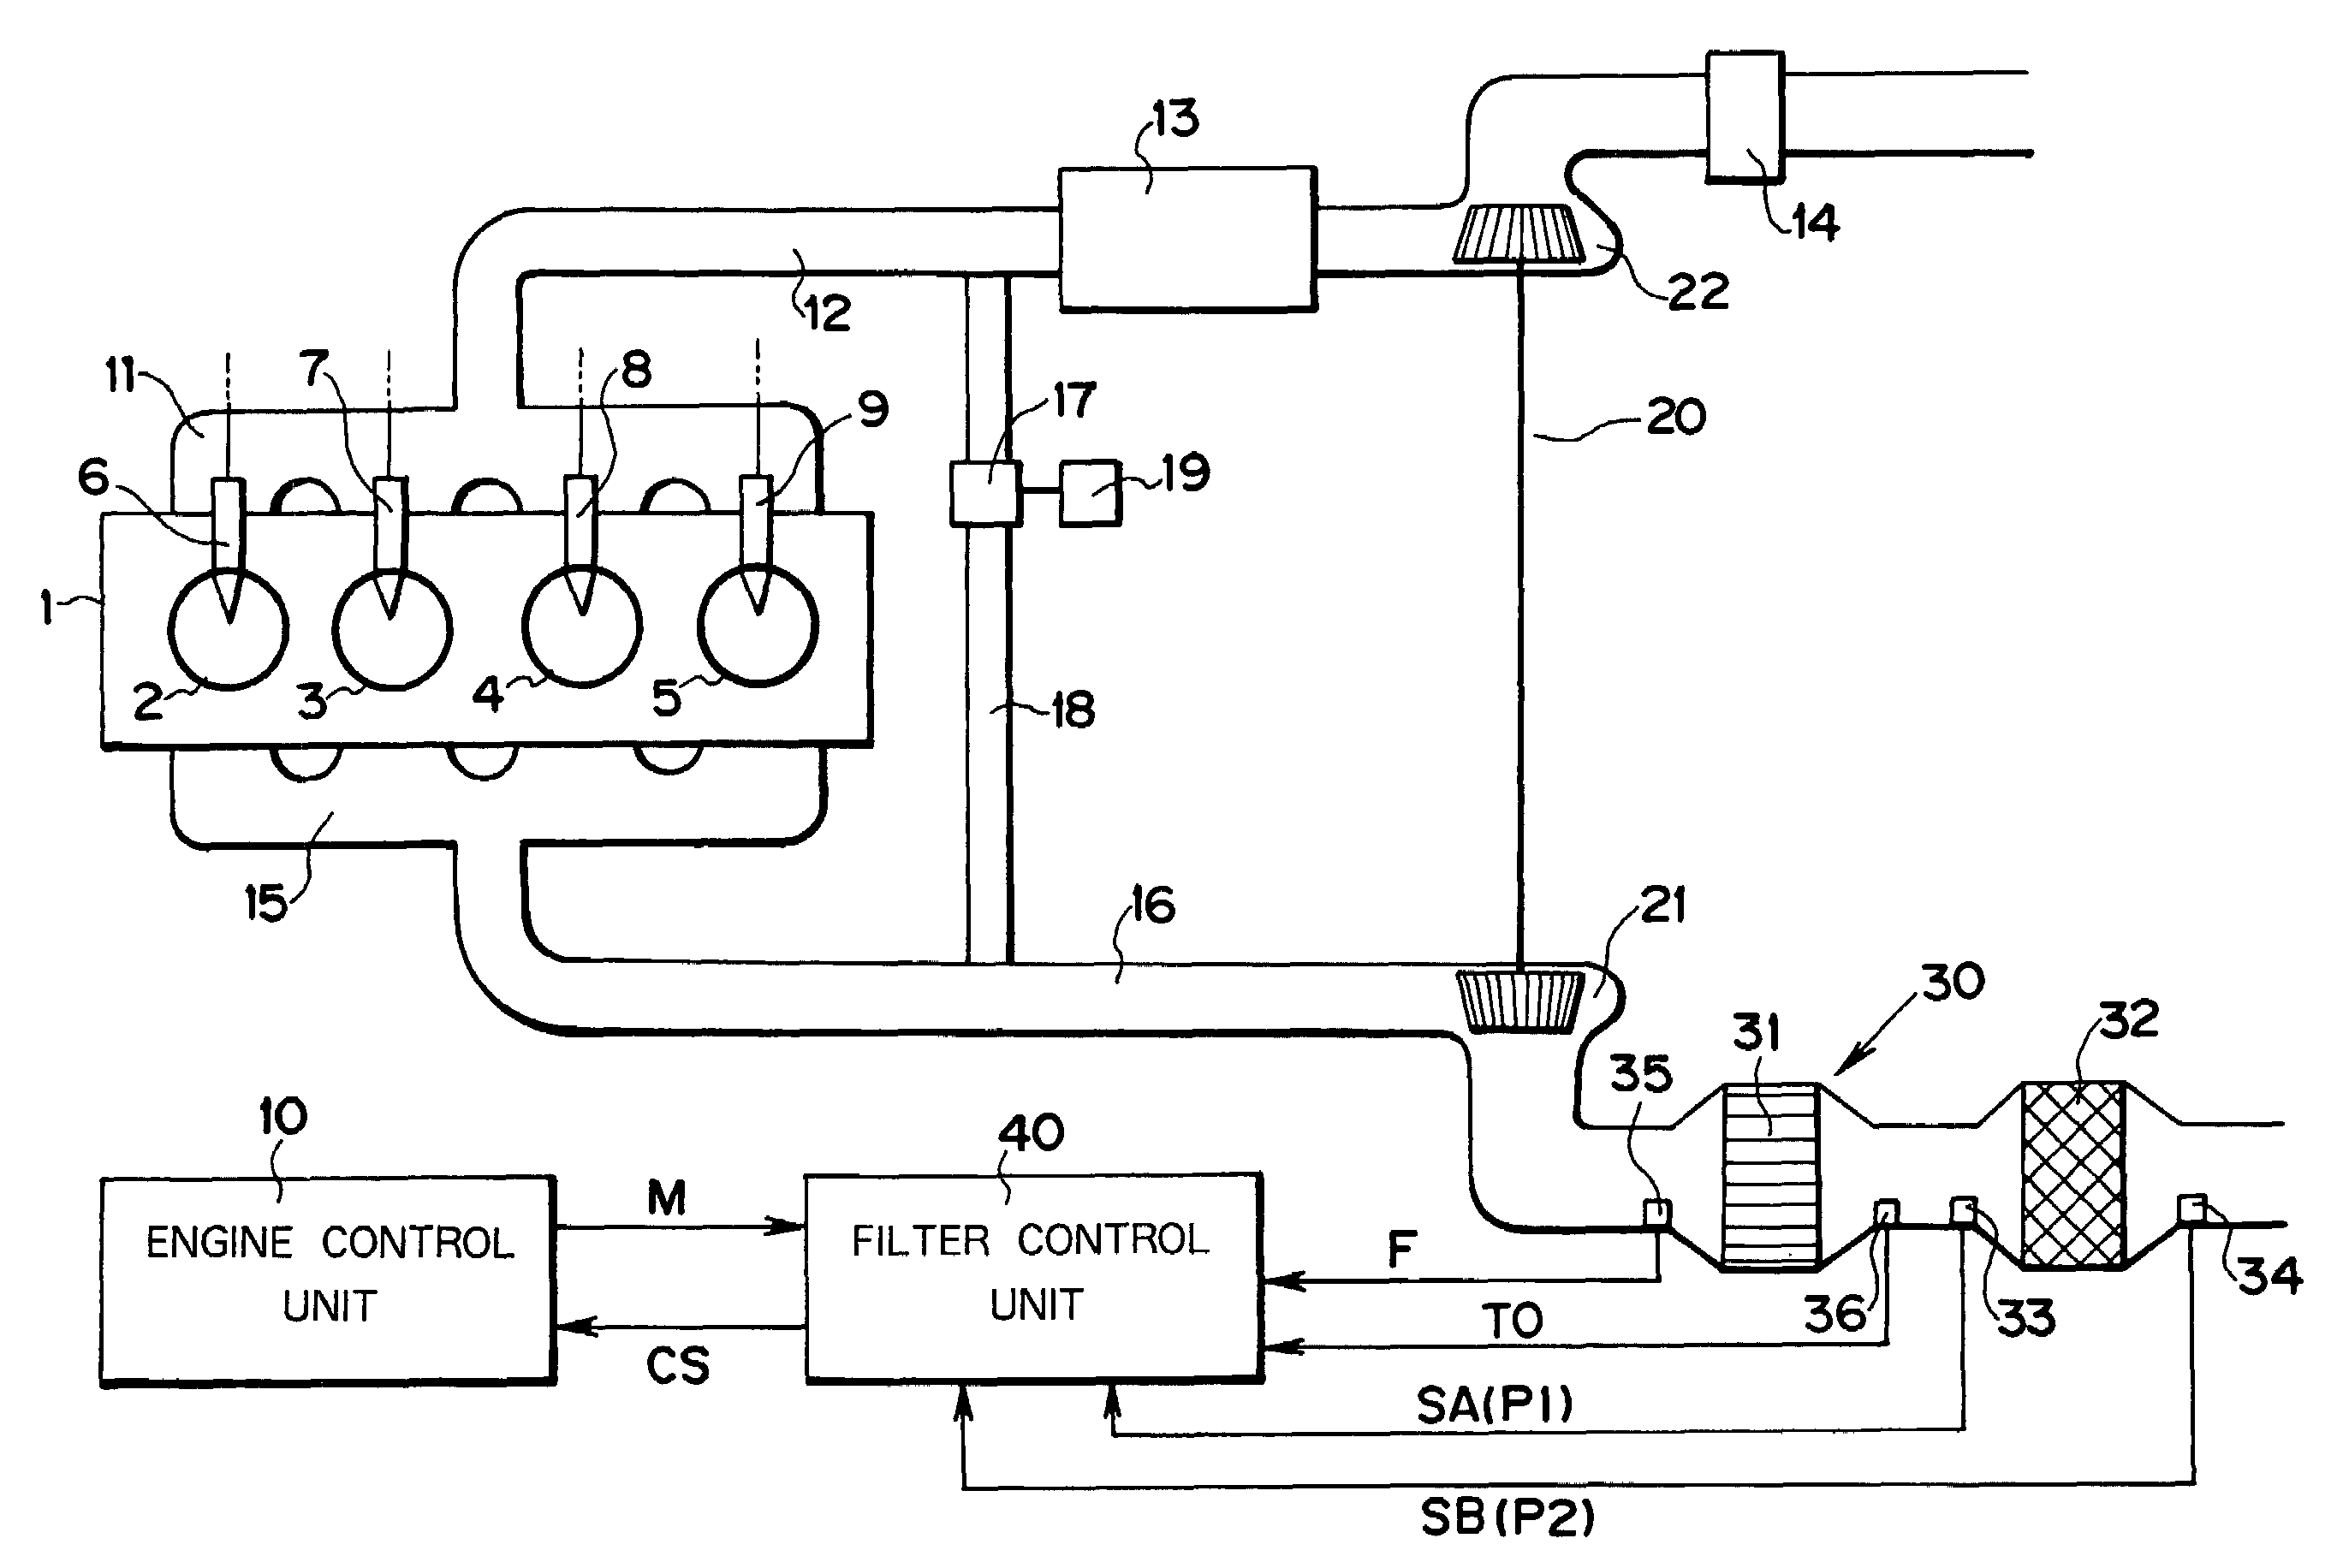 Filter control apparatus